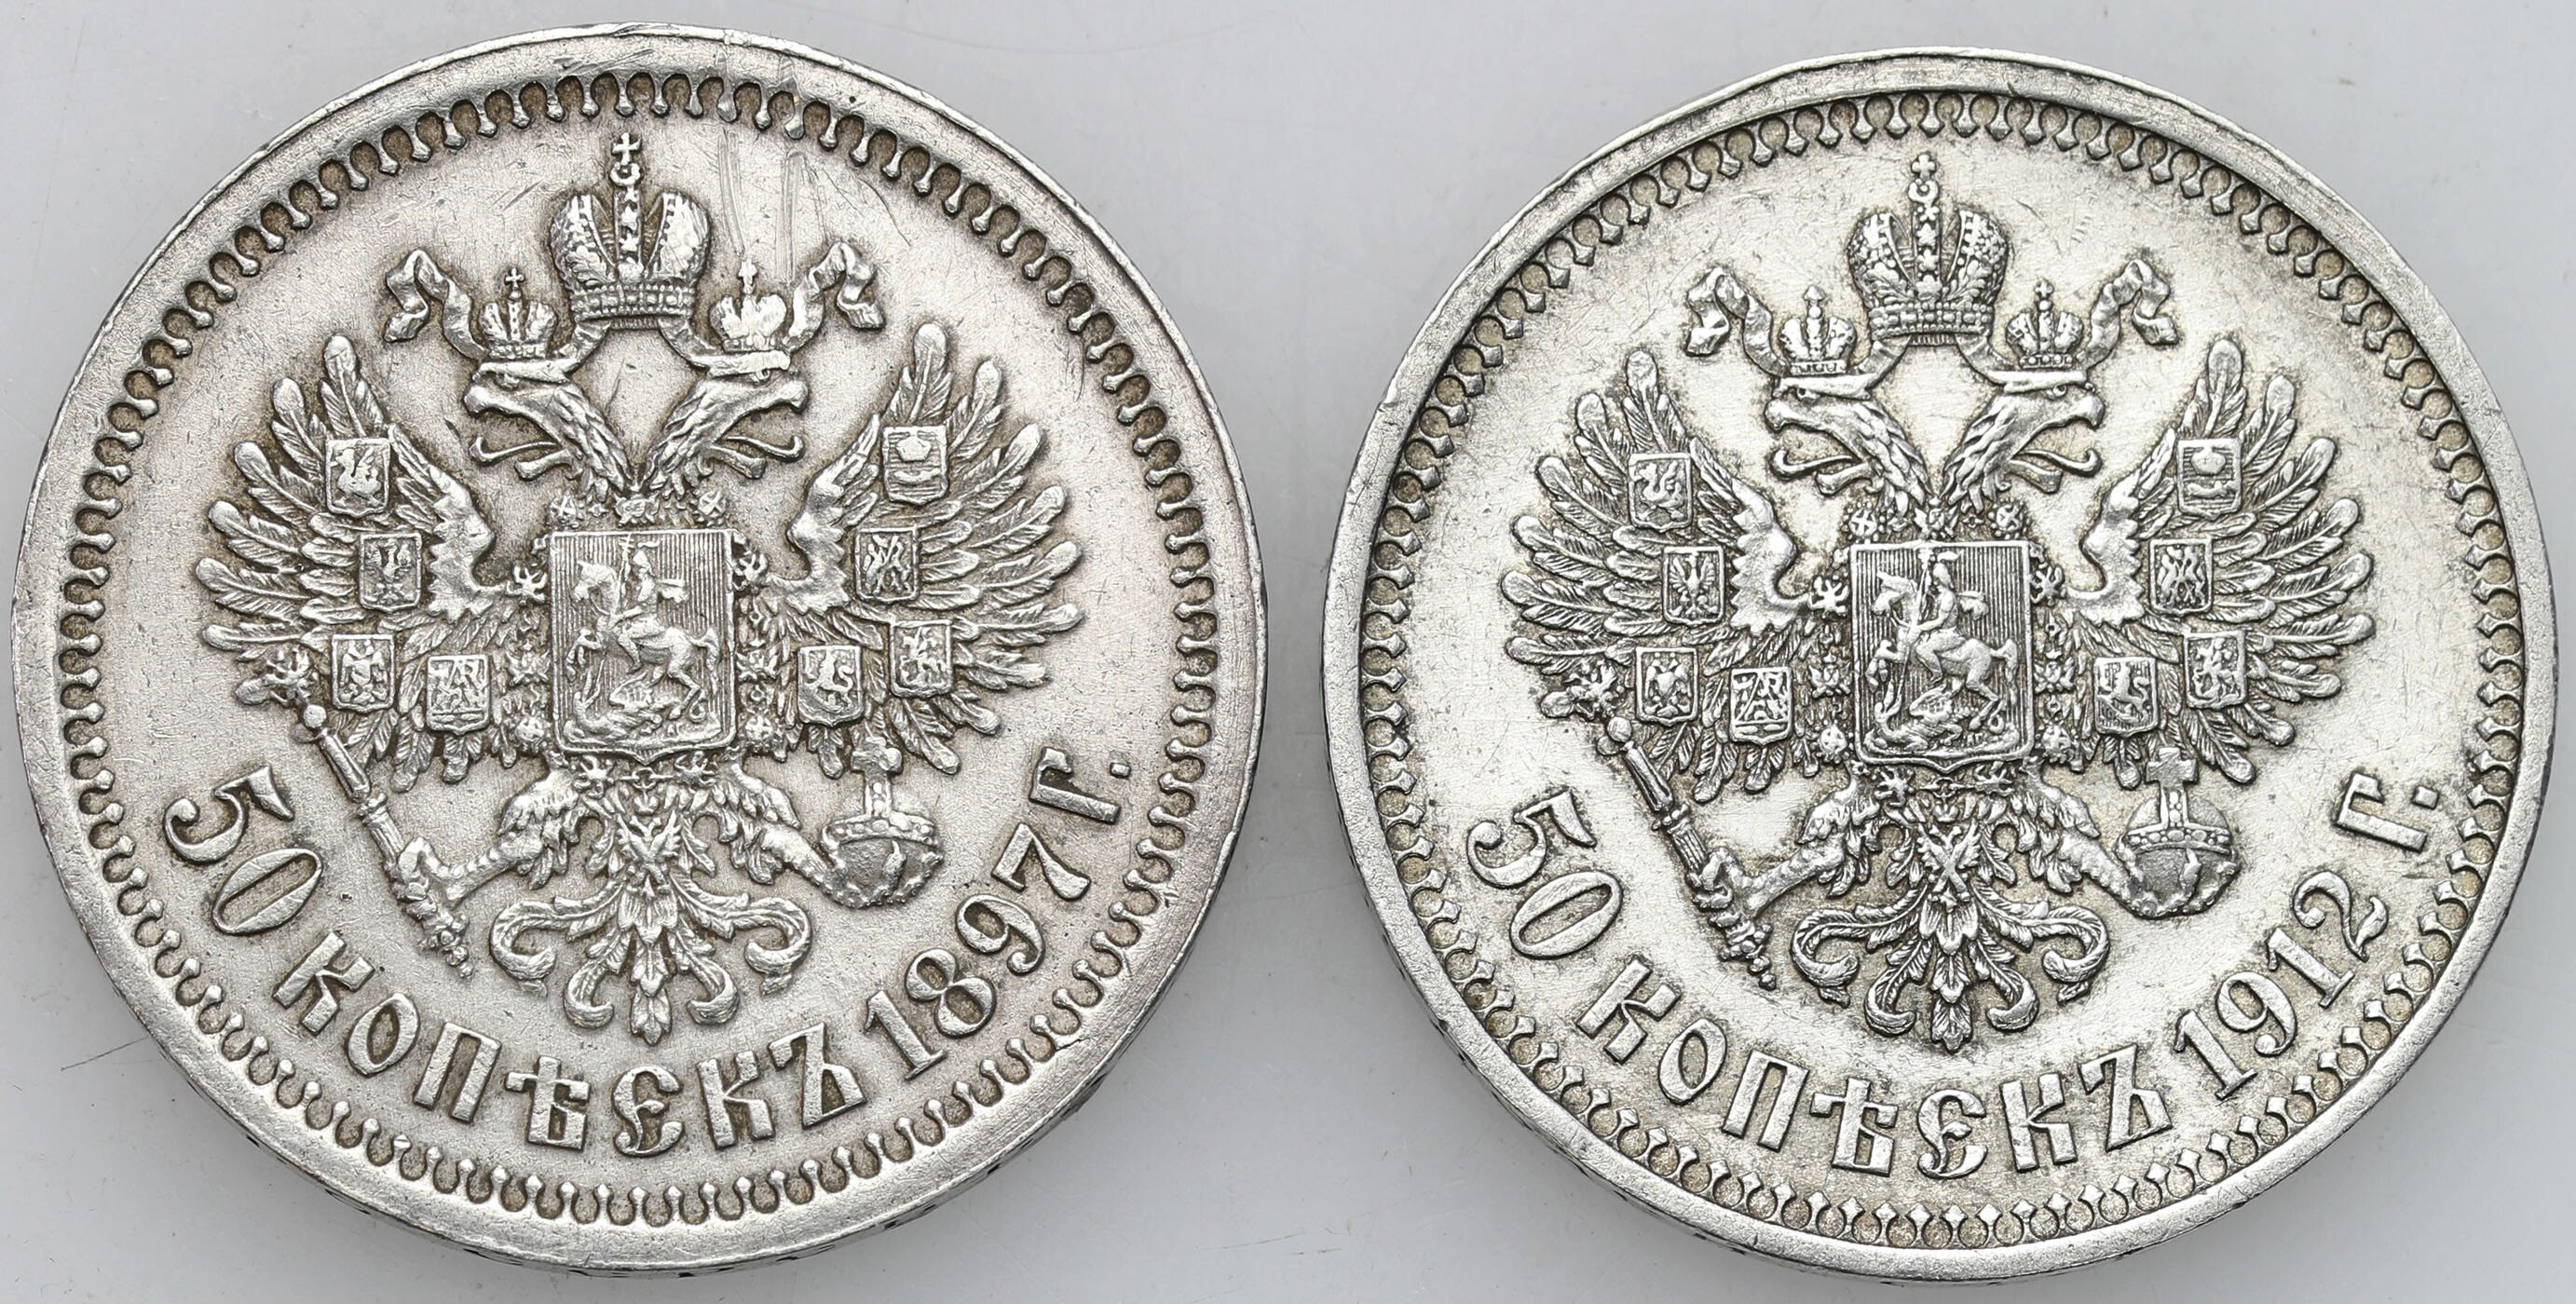  Rosja. Mikołaj II. 50 kopiejek (1/2 rubla) 1897 ★, Paryż i 1912 ЭБ, Petersburg